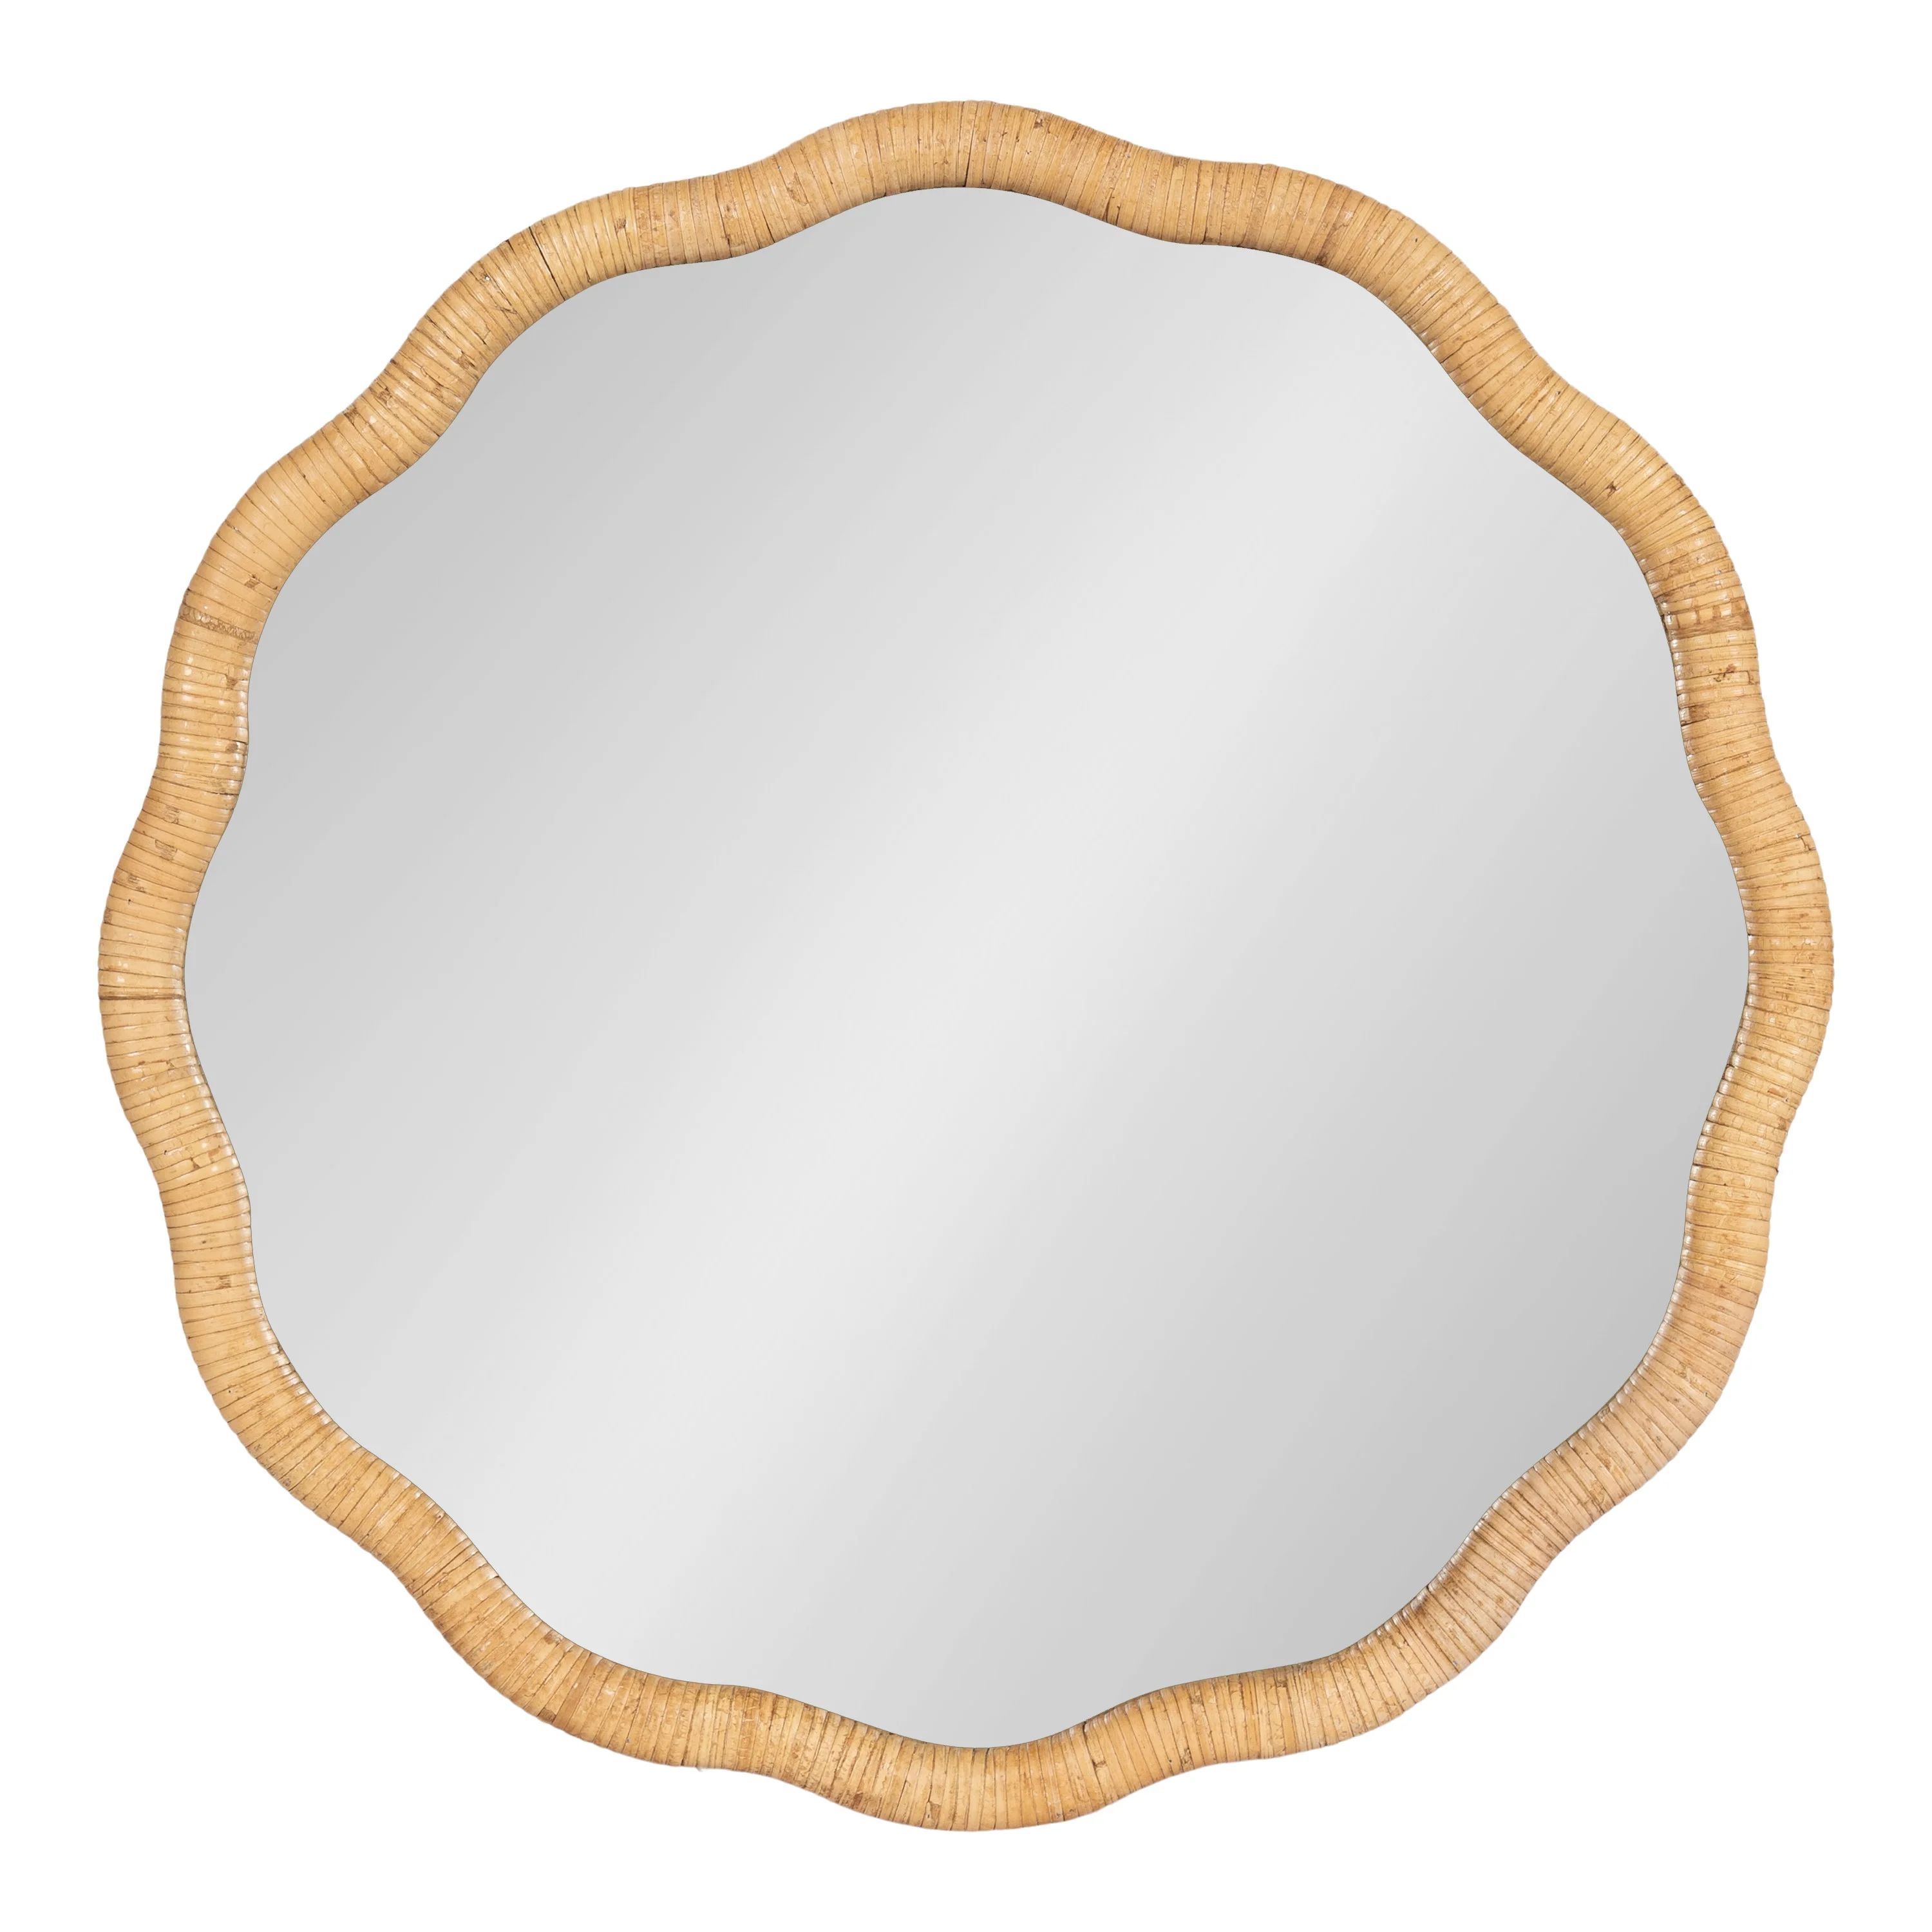 Kate and Laurel Rahfy Boho Scalloped Round Rattan Mirror, 26 Inch Diameter, Natural Wood, Decorat... | Walmart (US)